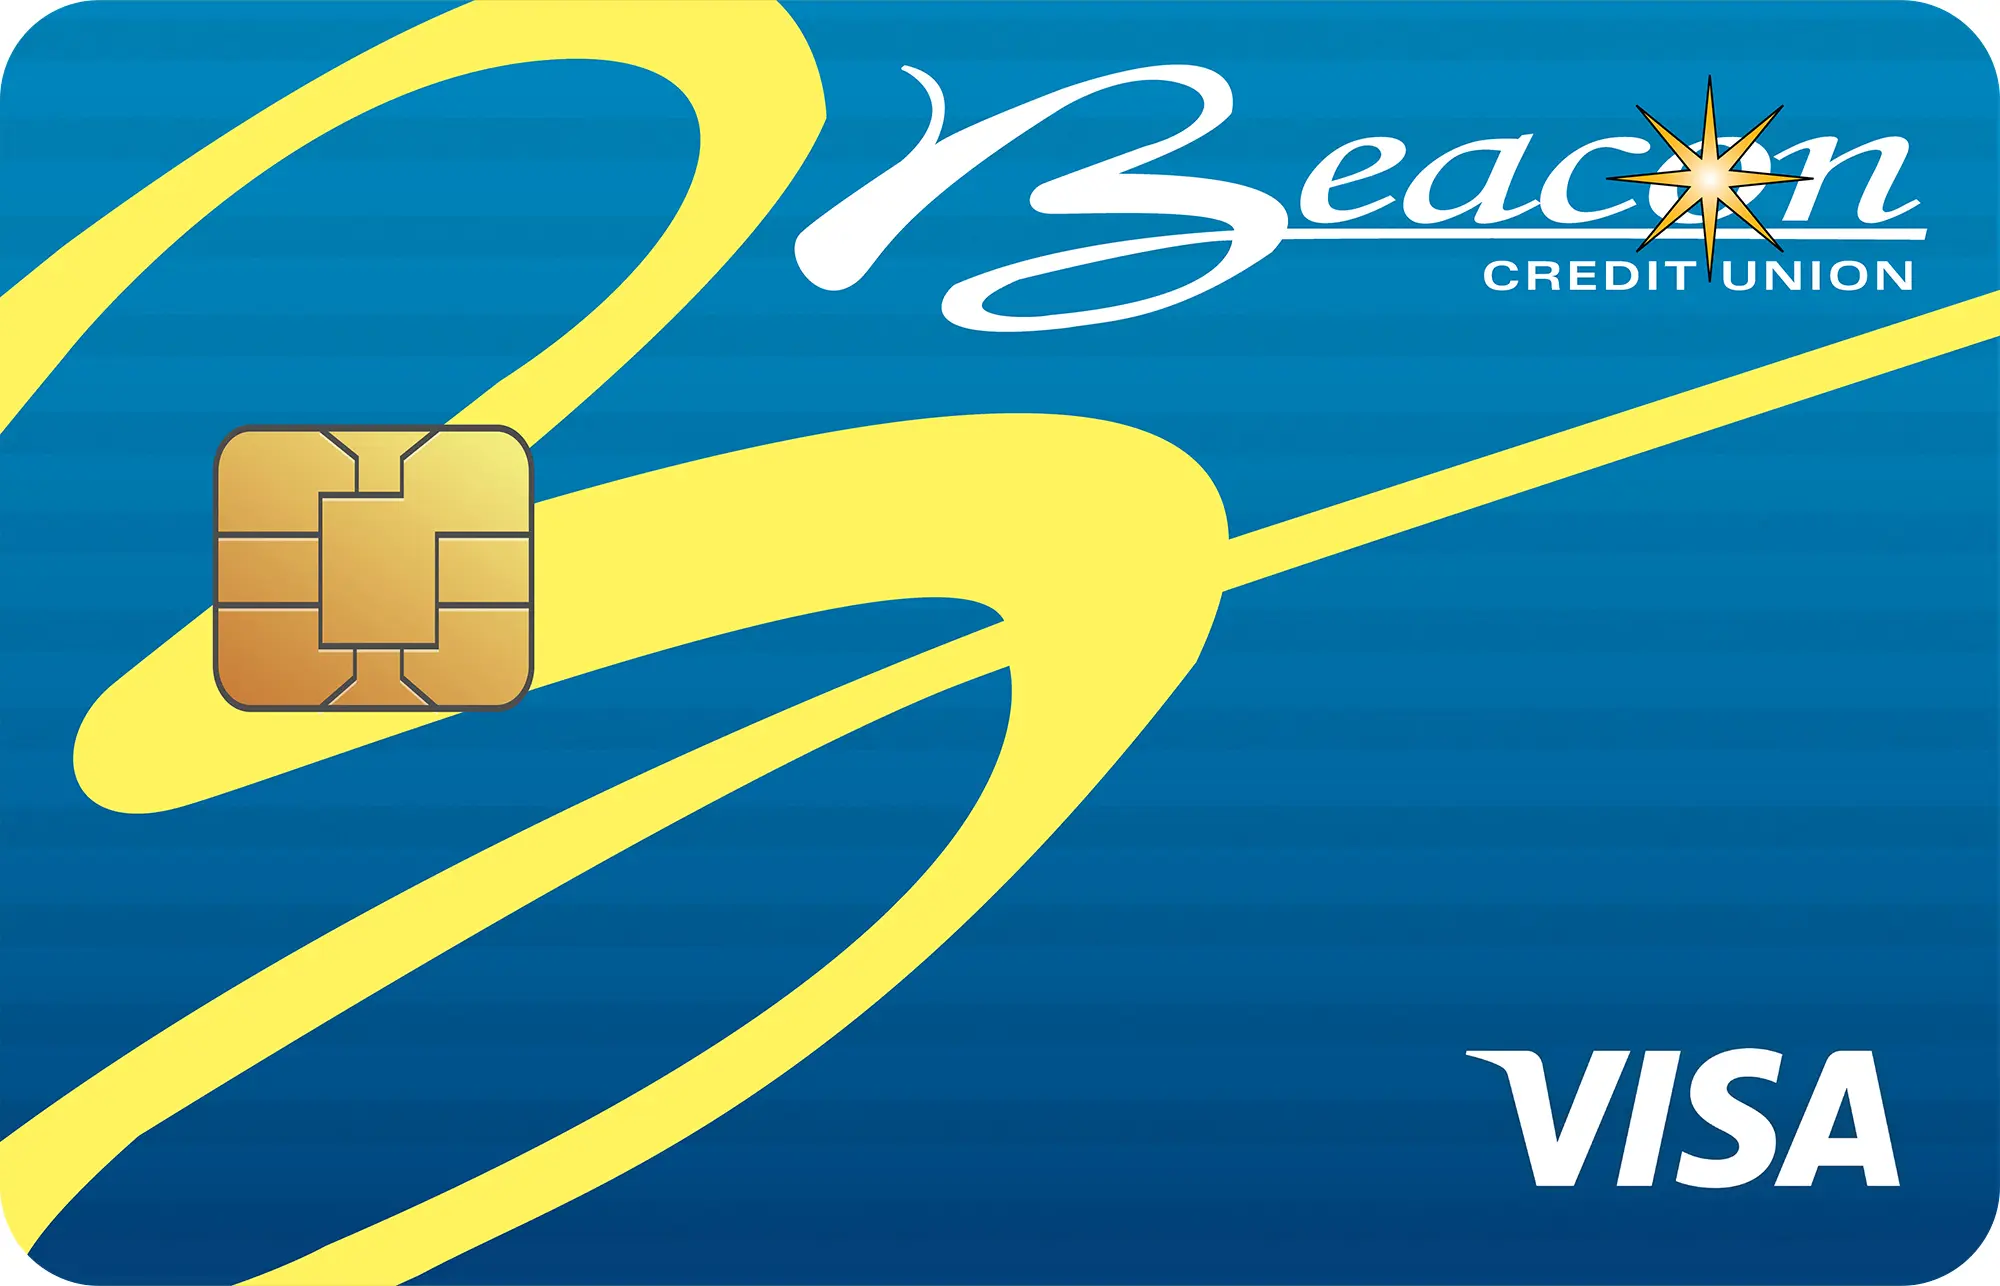 Beacon Debit Card